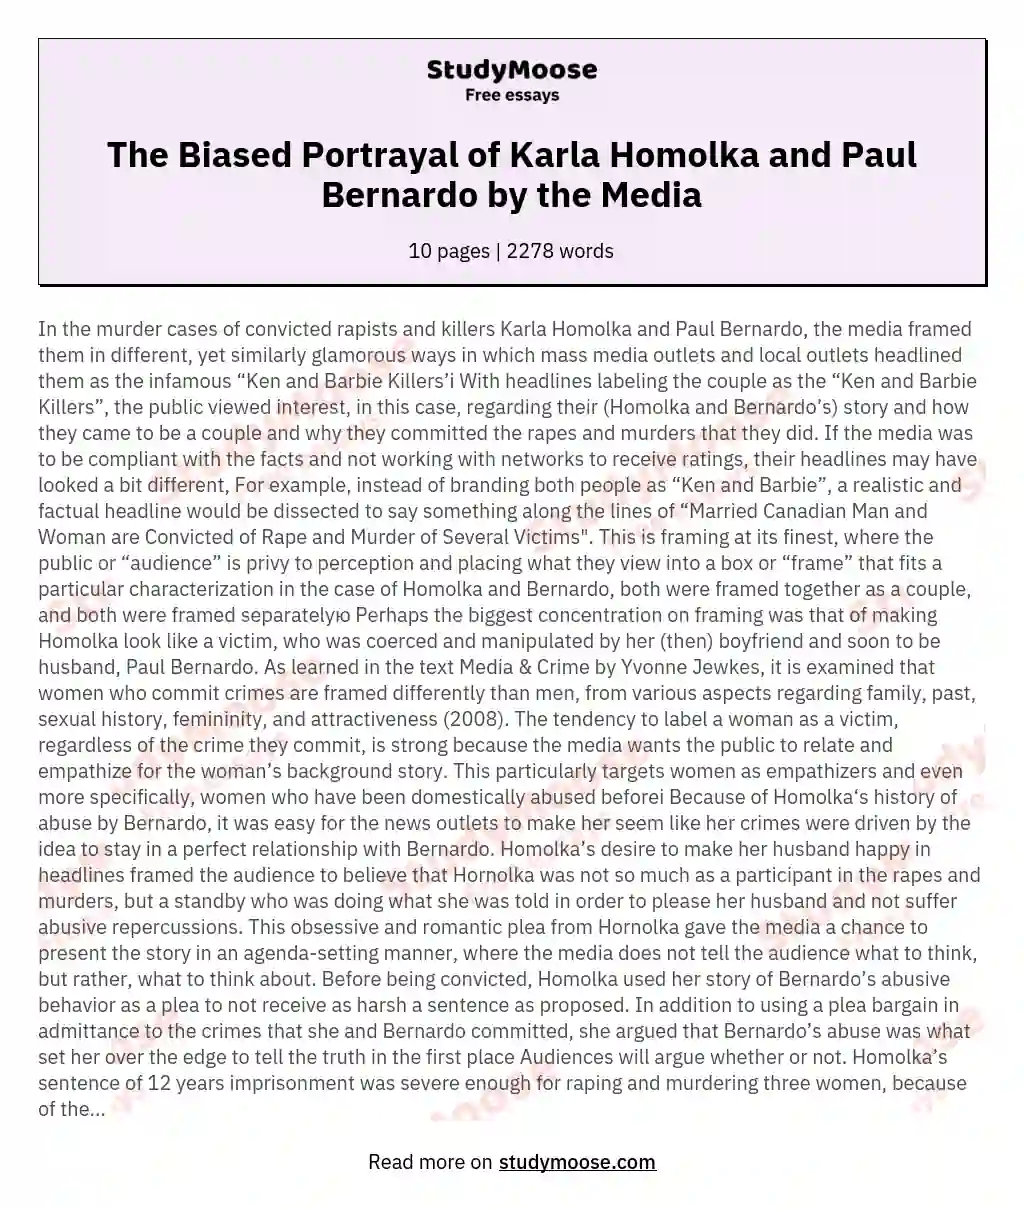 The Biased Portrayal of Karla Homolka and Paul Bernardo by the Media essay